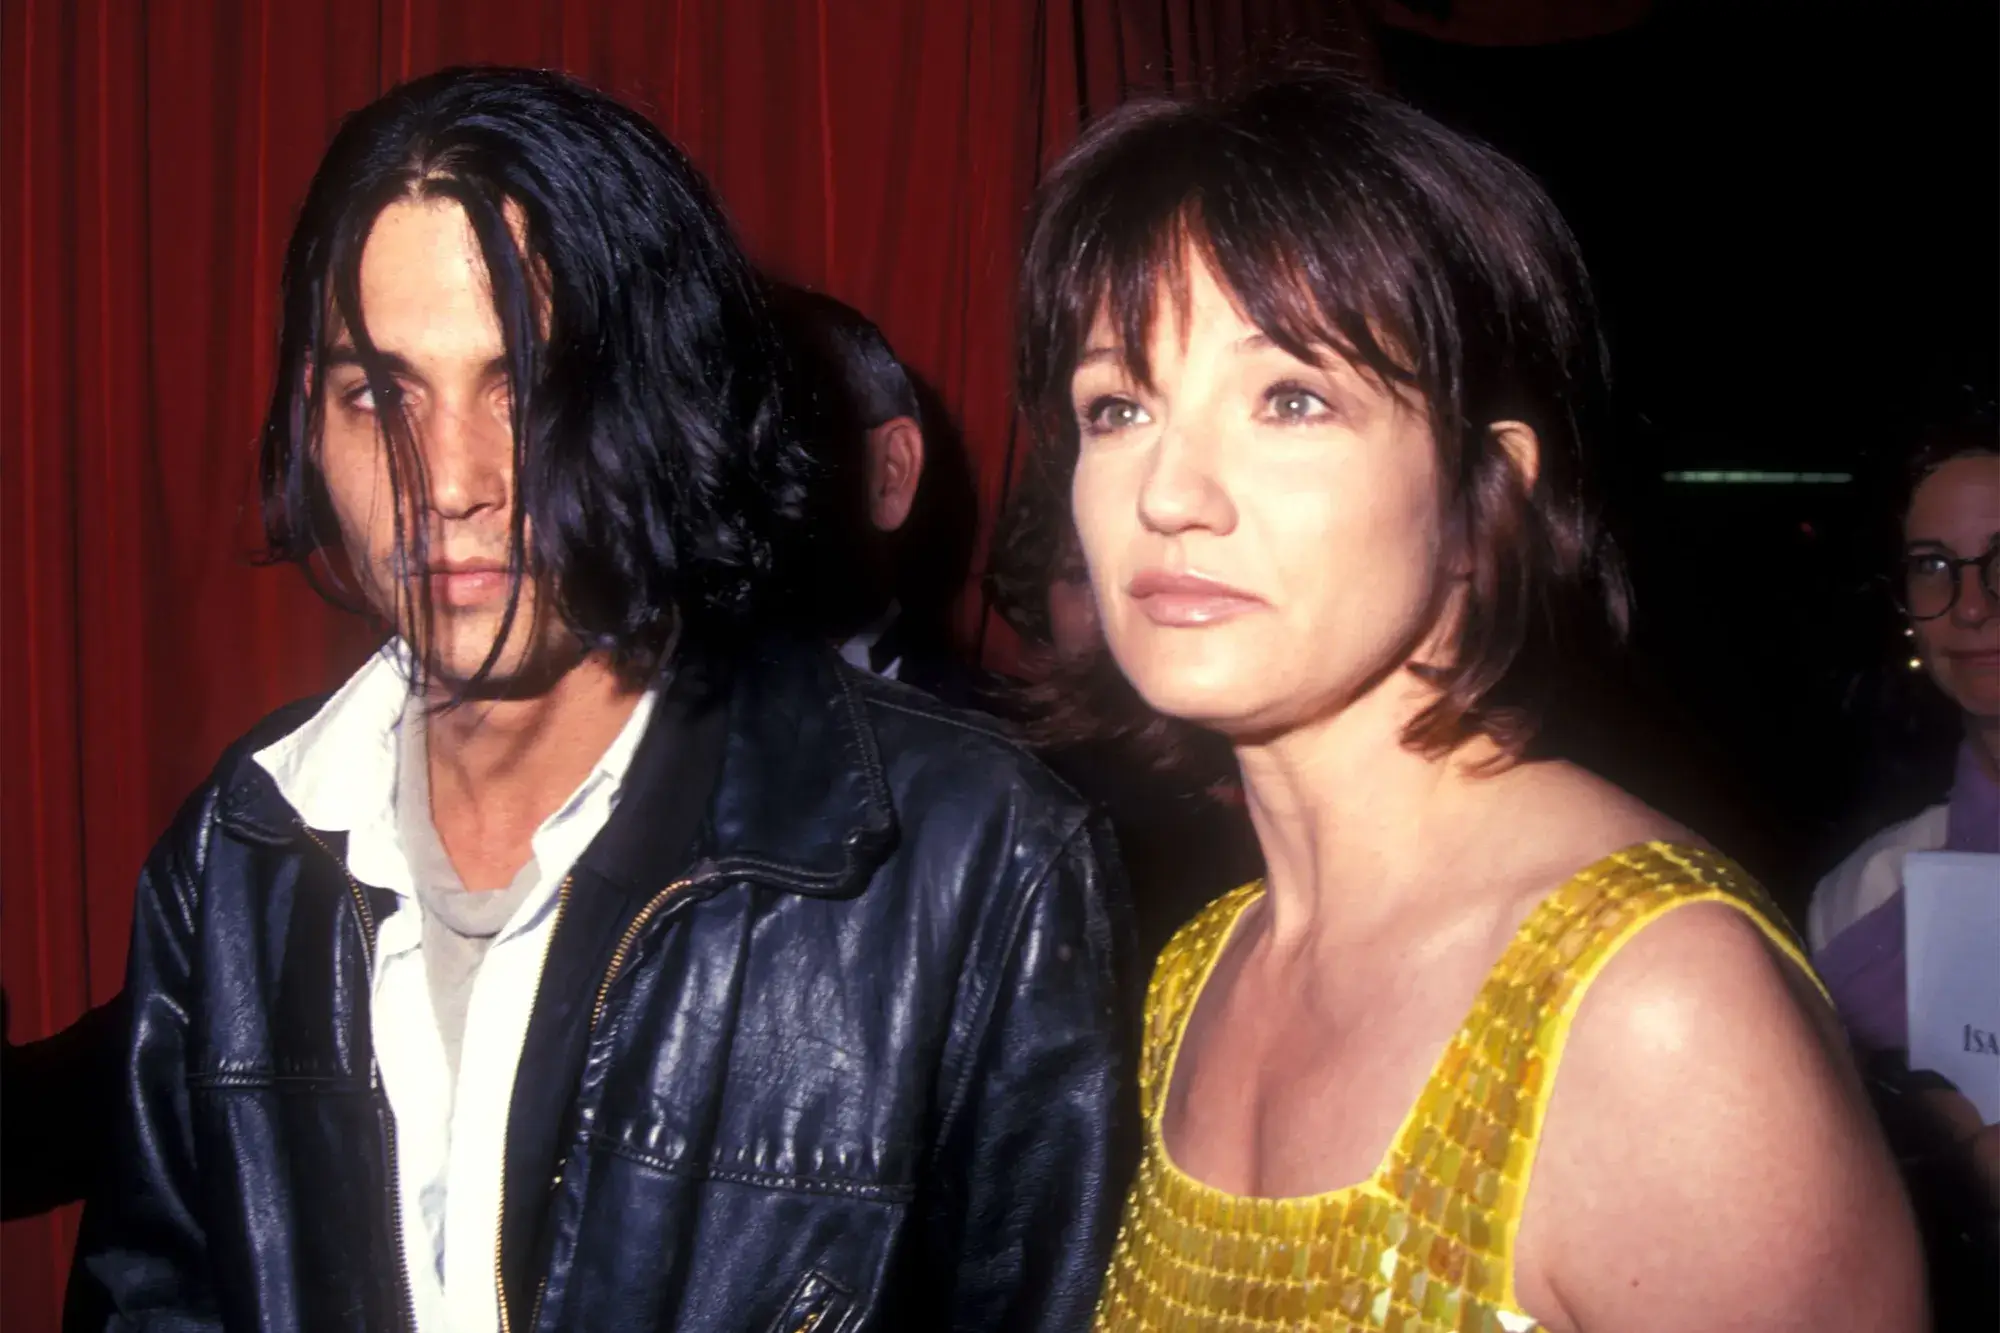 Johnny Depp and Ellen Barkin